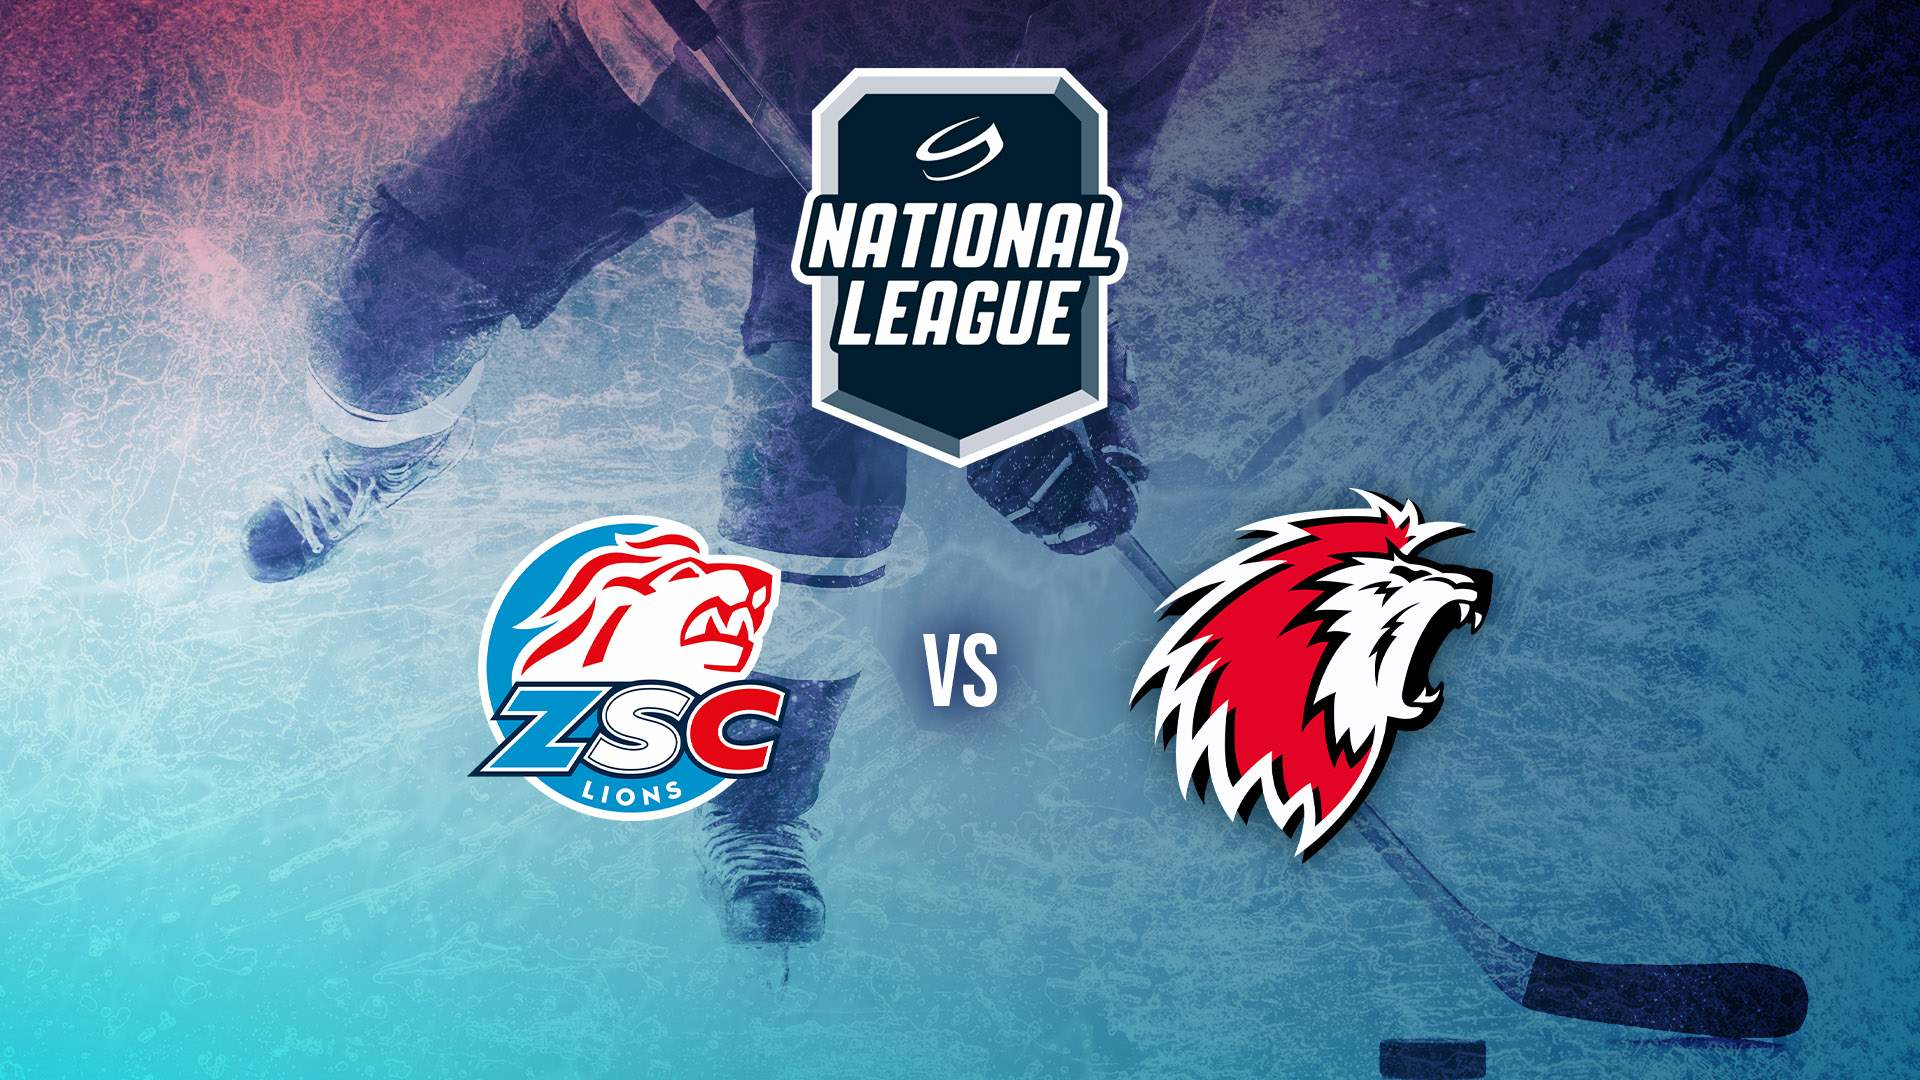 Ice Hockey: Switzerland National League. Final. Game 3 (National League), Šveicarija, 2022